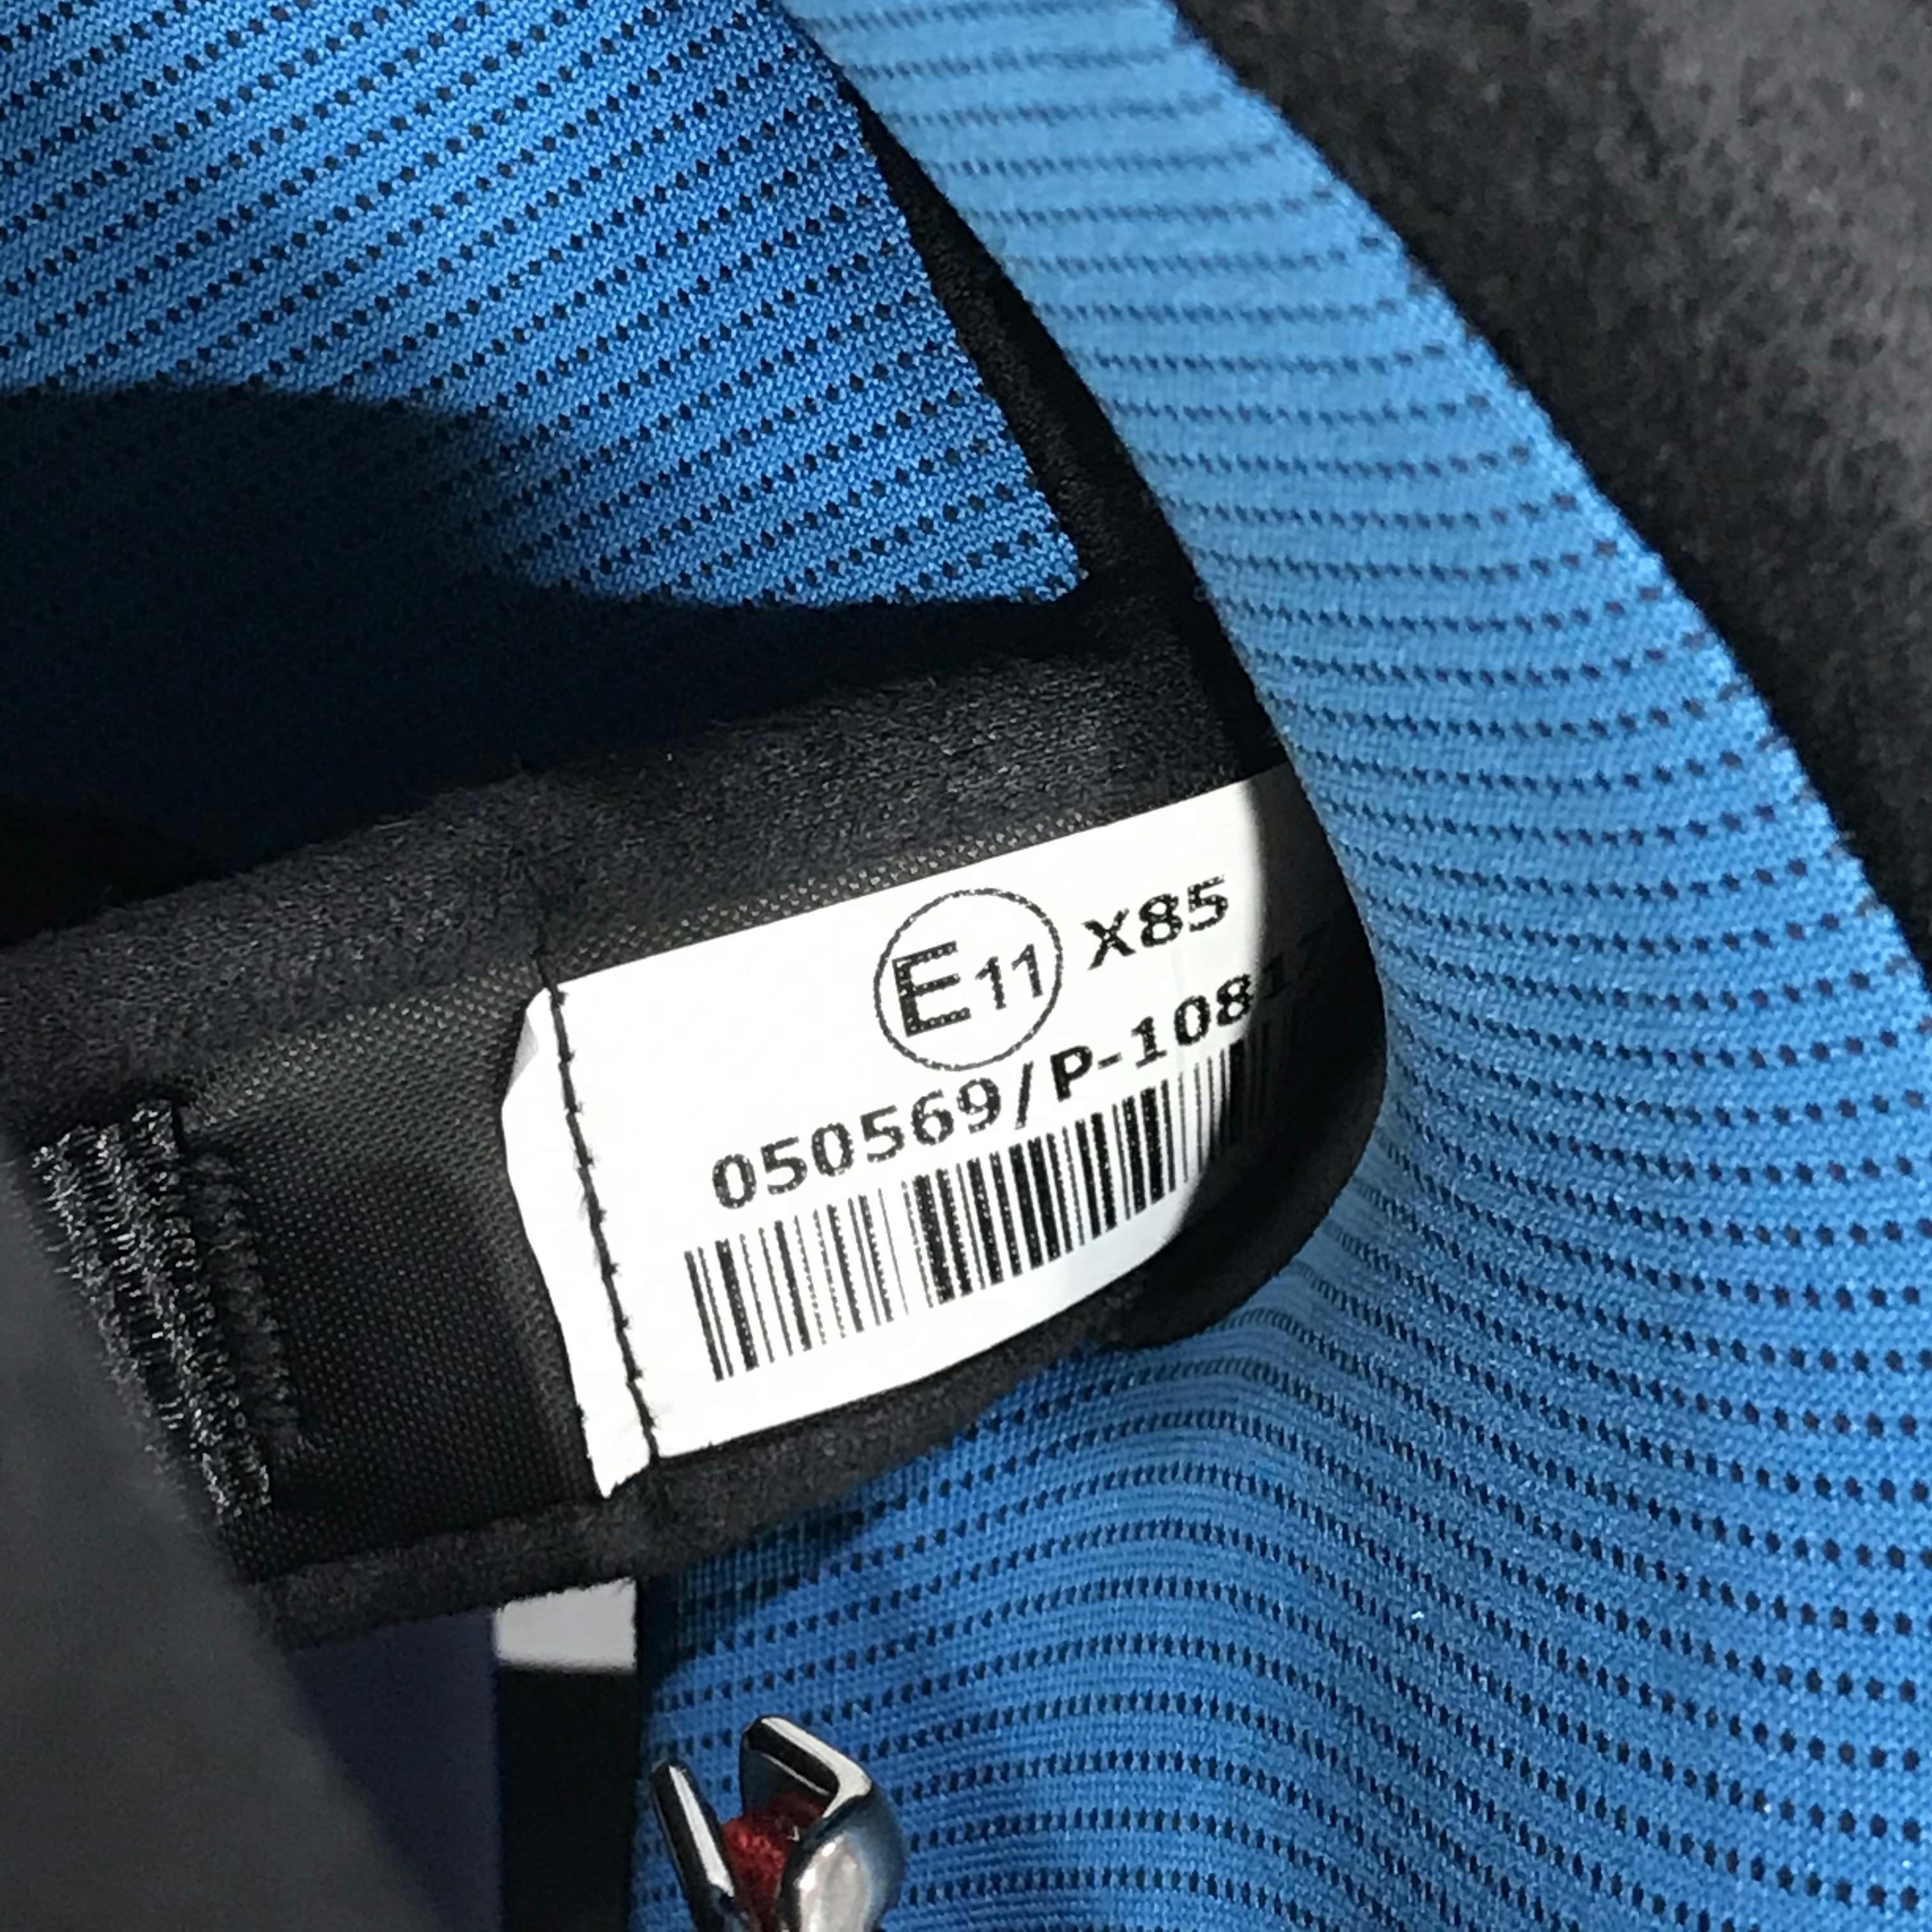 European Standards tag inside a helmet. 